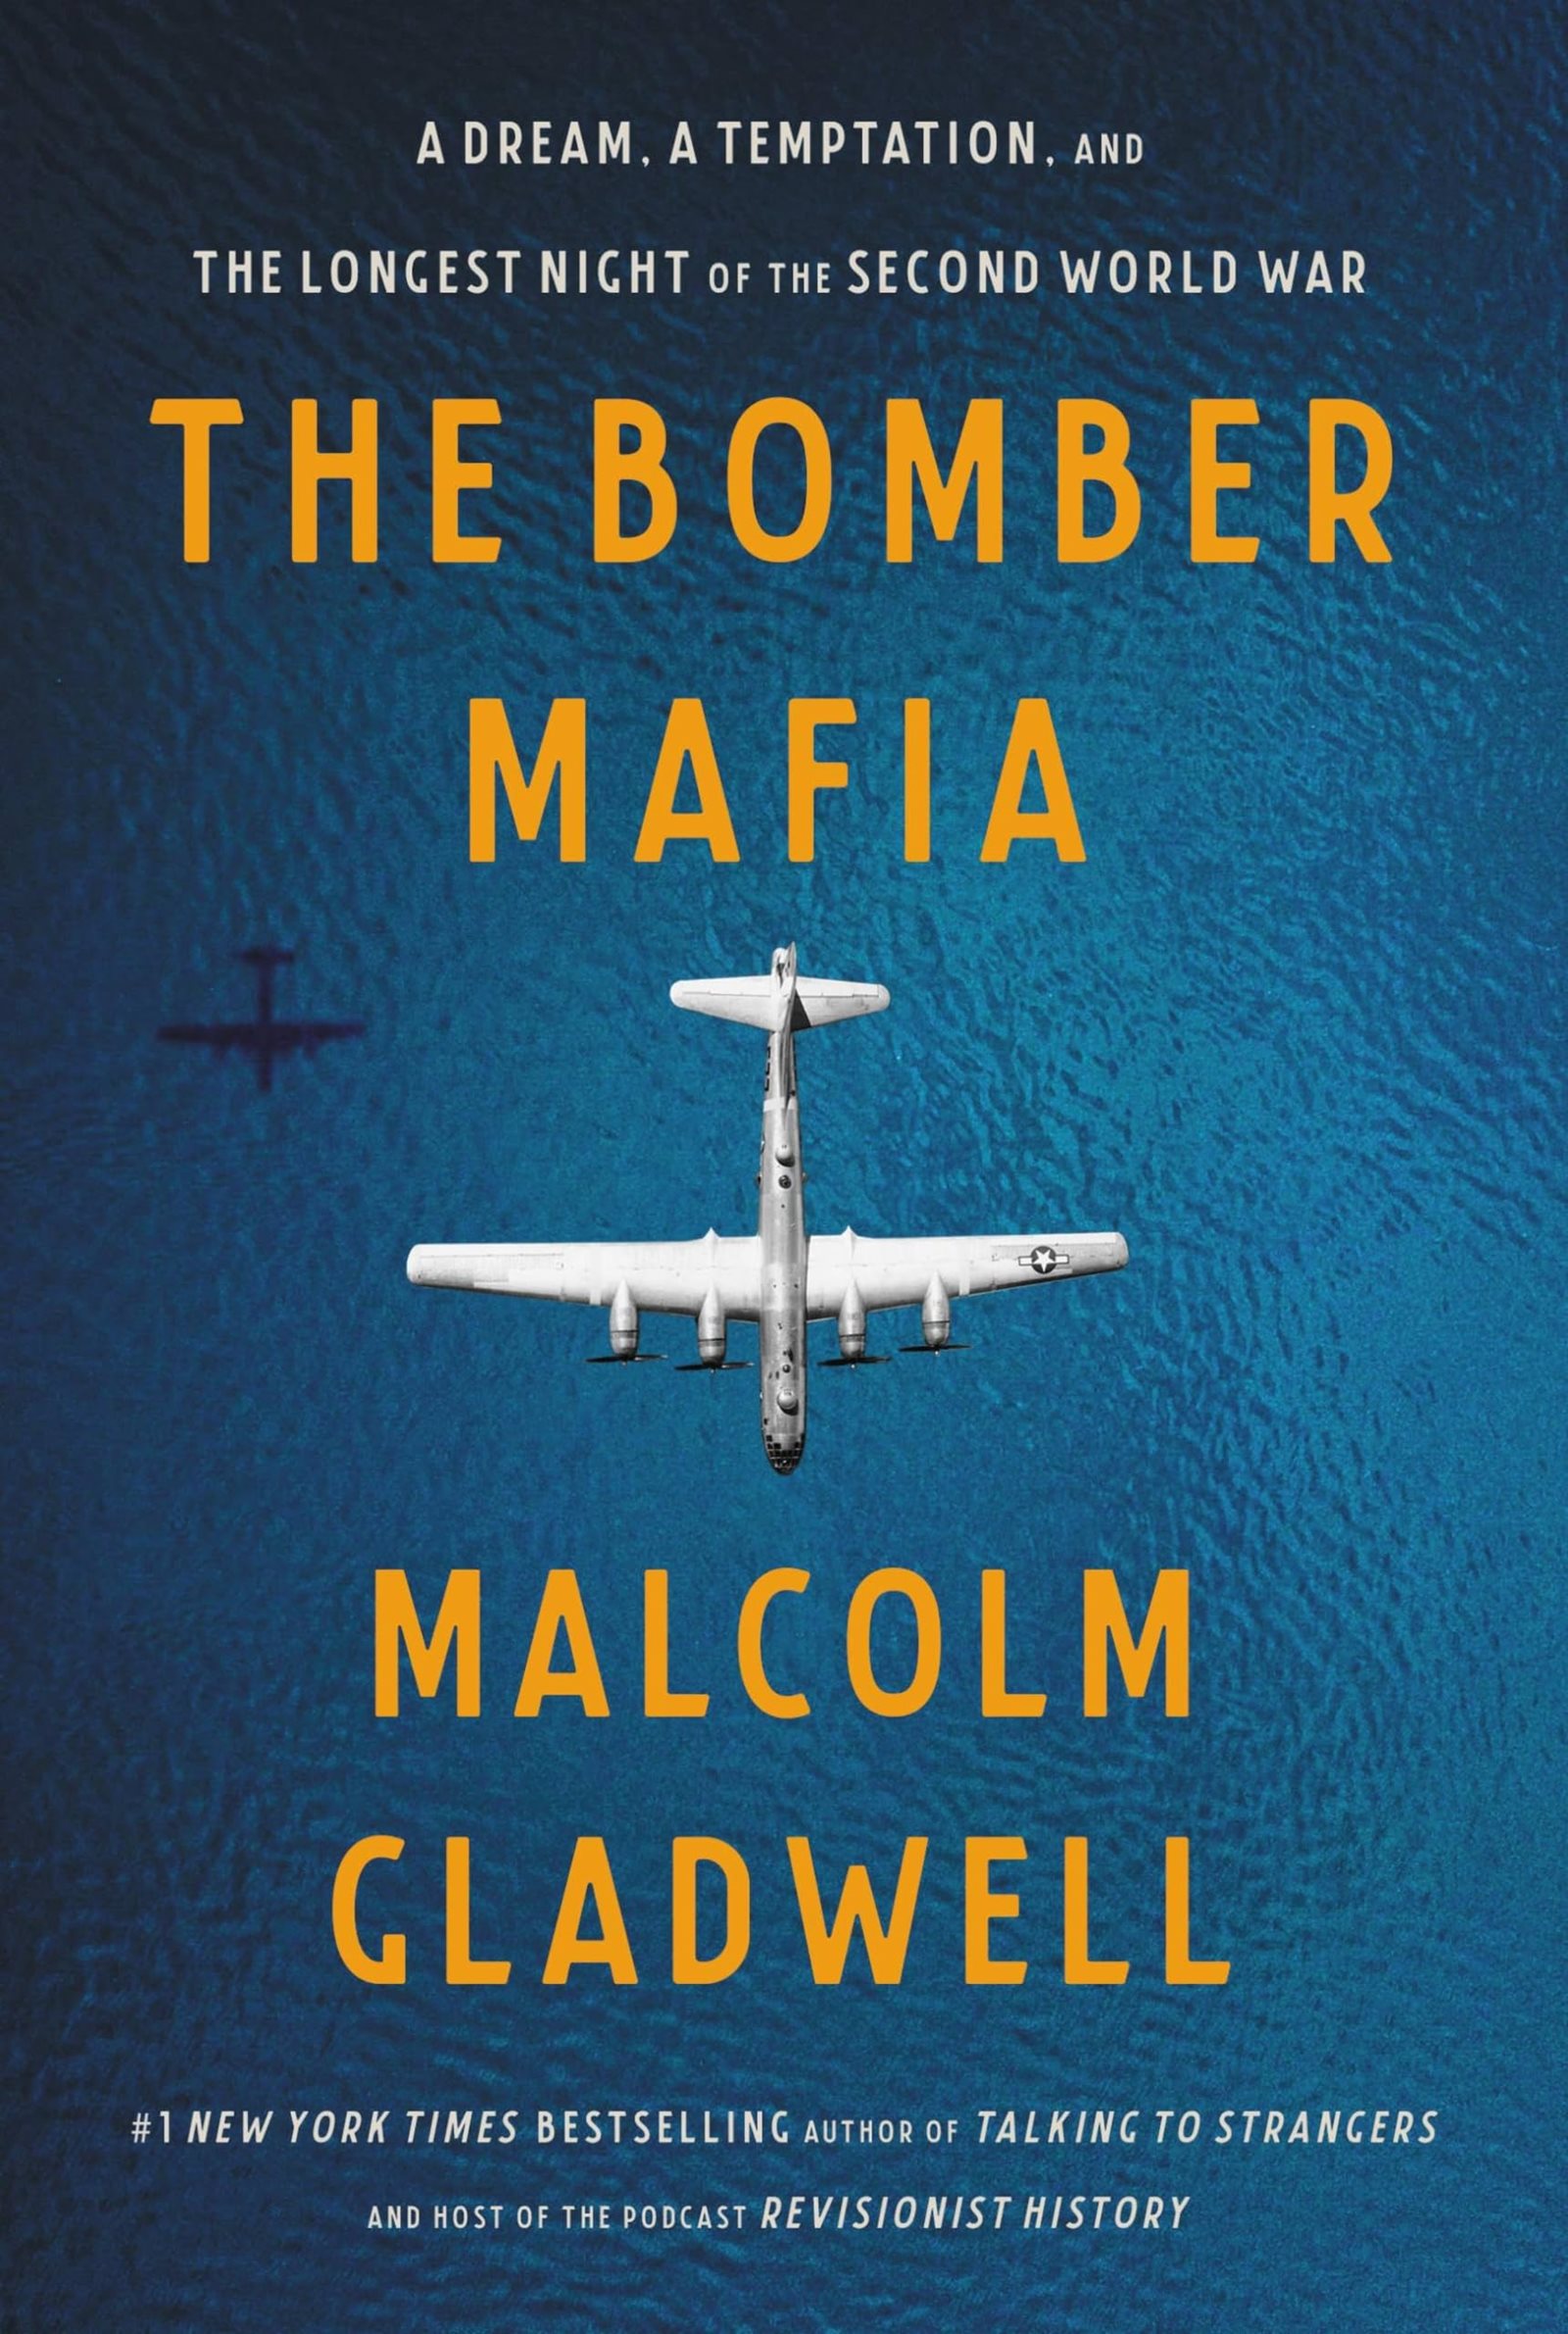 The Bomber Mafia by Malcom Gladwell